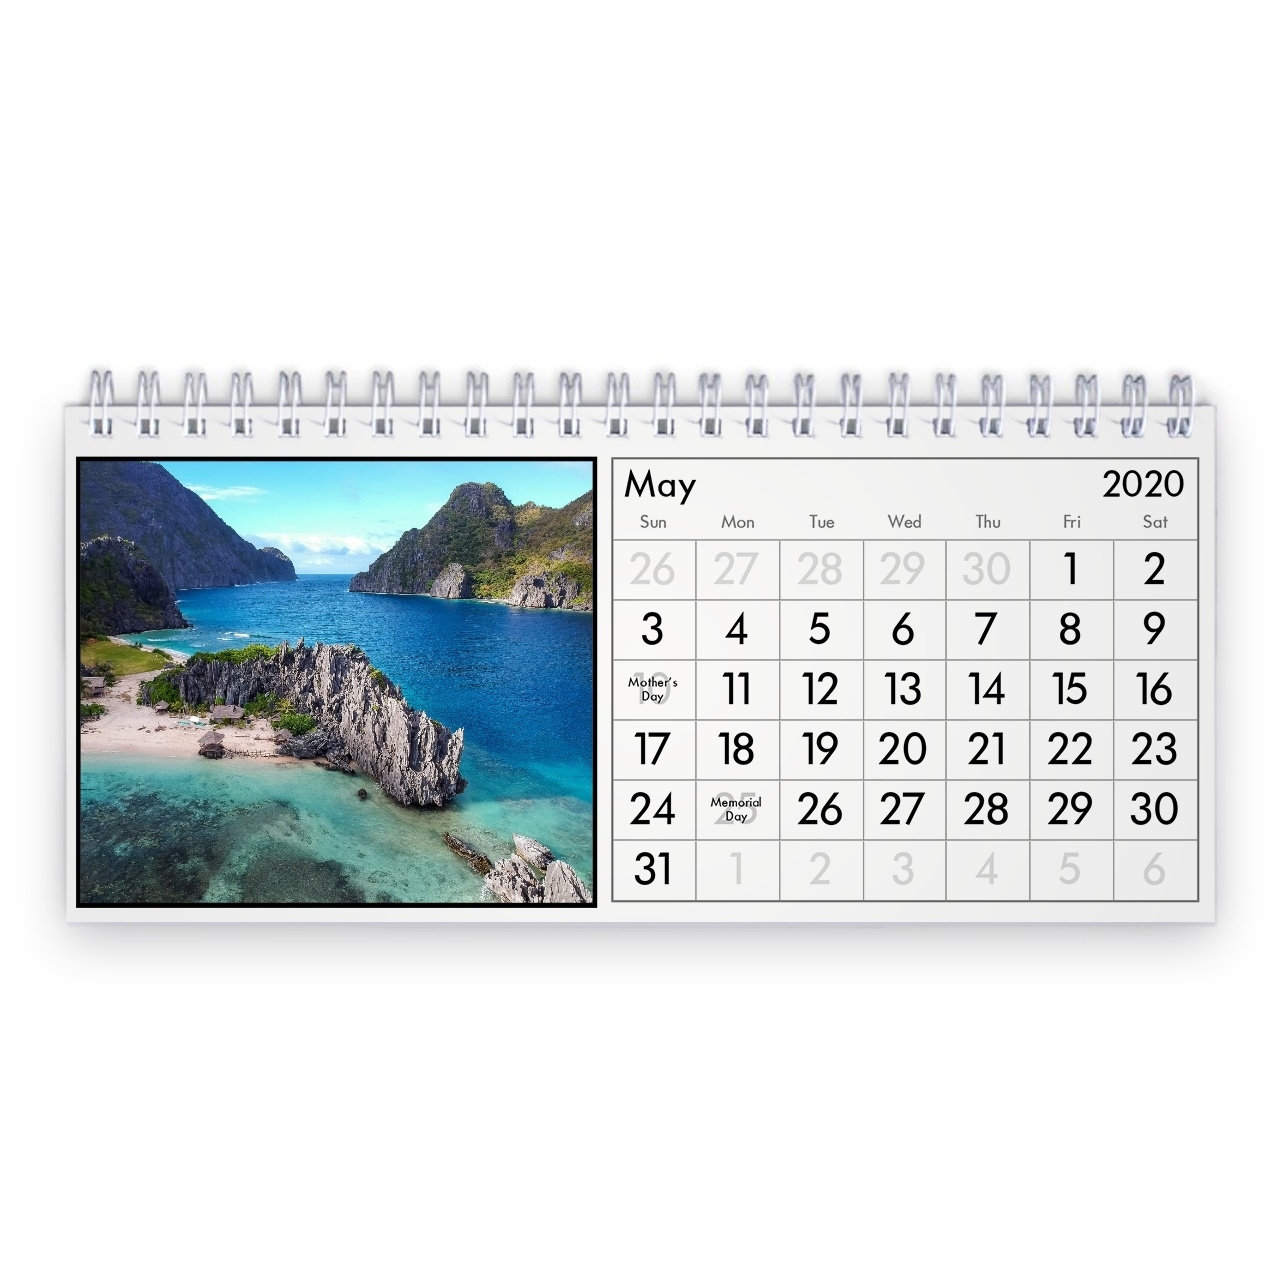 Philippines 2021 Desk Calendar September 2021 Calendar With Holidays Philippines